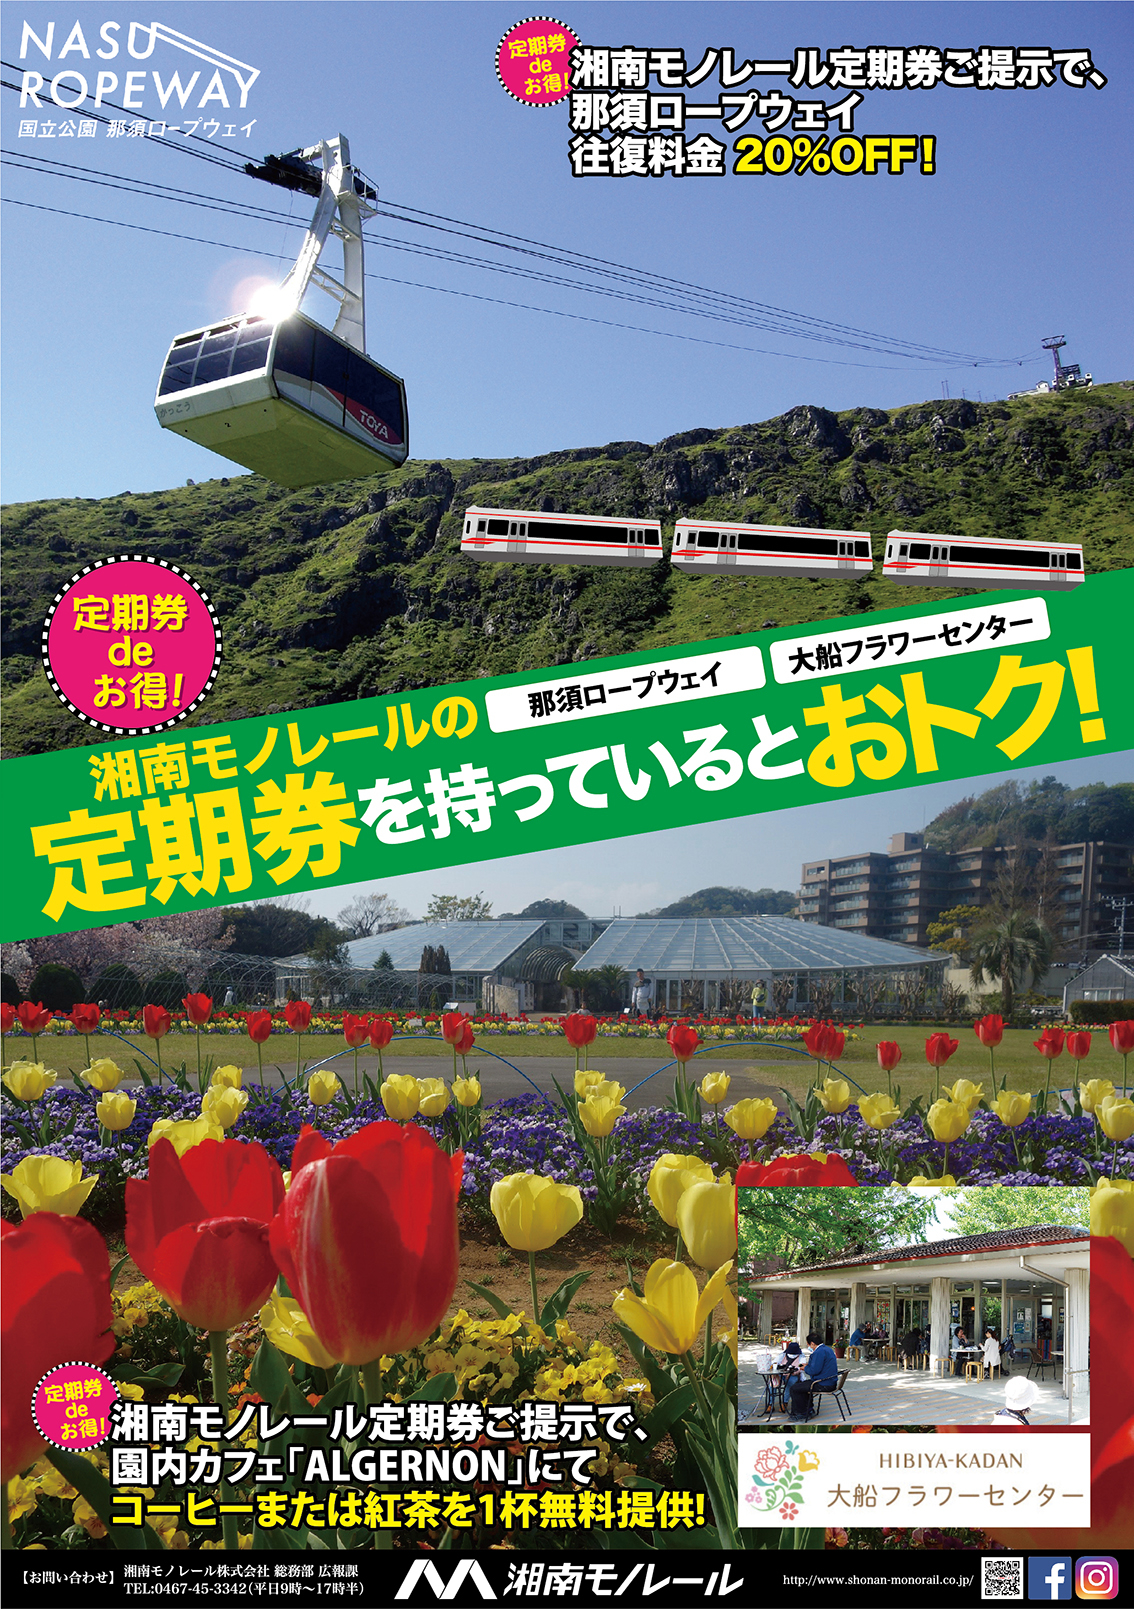 https://www.shonan-monorail.co.jp/news/upload/765bc788989567d241e98096771cec990da94c6e.jpg